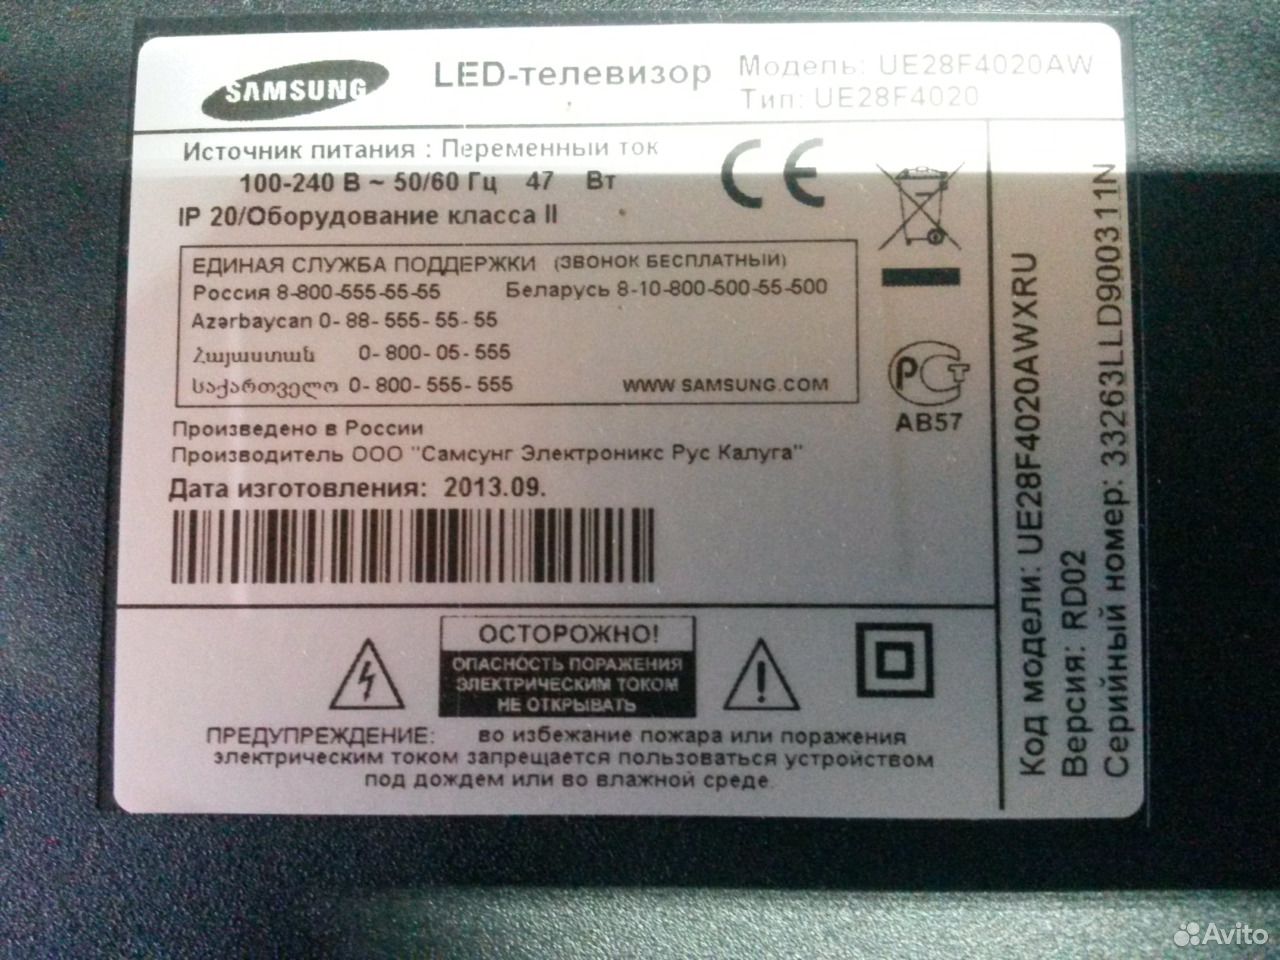 Samsung ue28f4020 led. Ue28f4020aw.